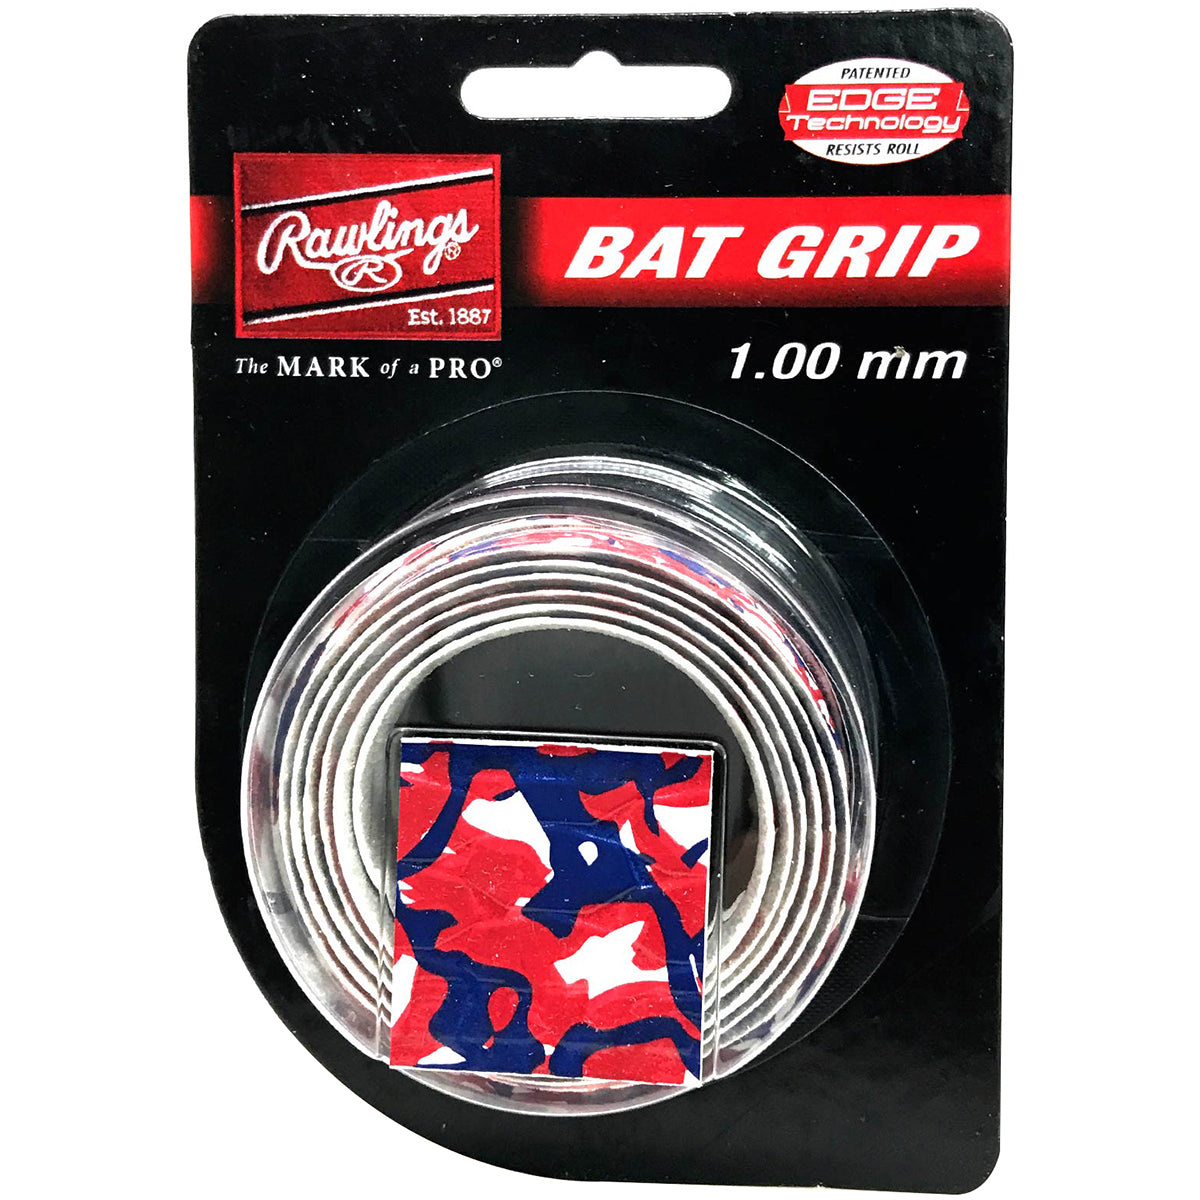 Rawlings 1.0mm Replacement Baseball Bat Grip Tape - Gold Rush